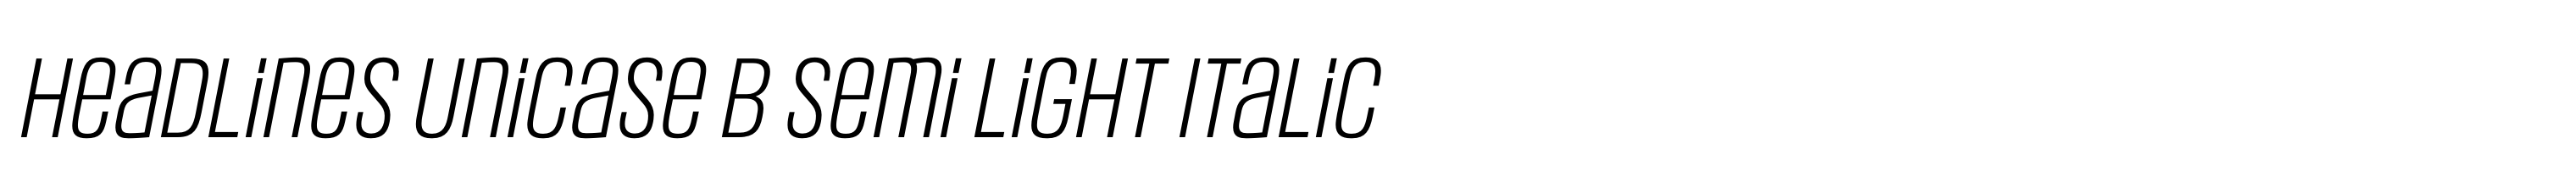 Headlines Unicase B Semi Light Italic